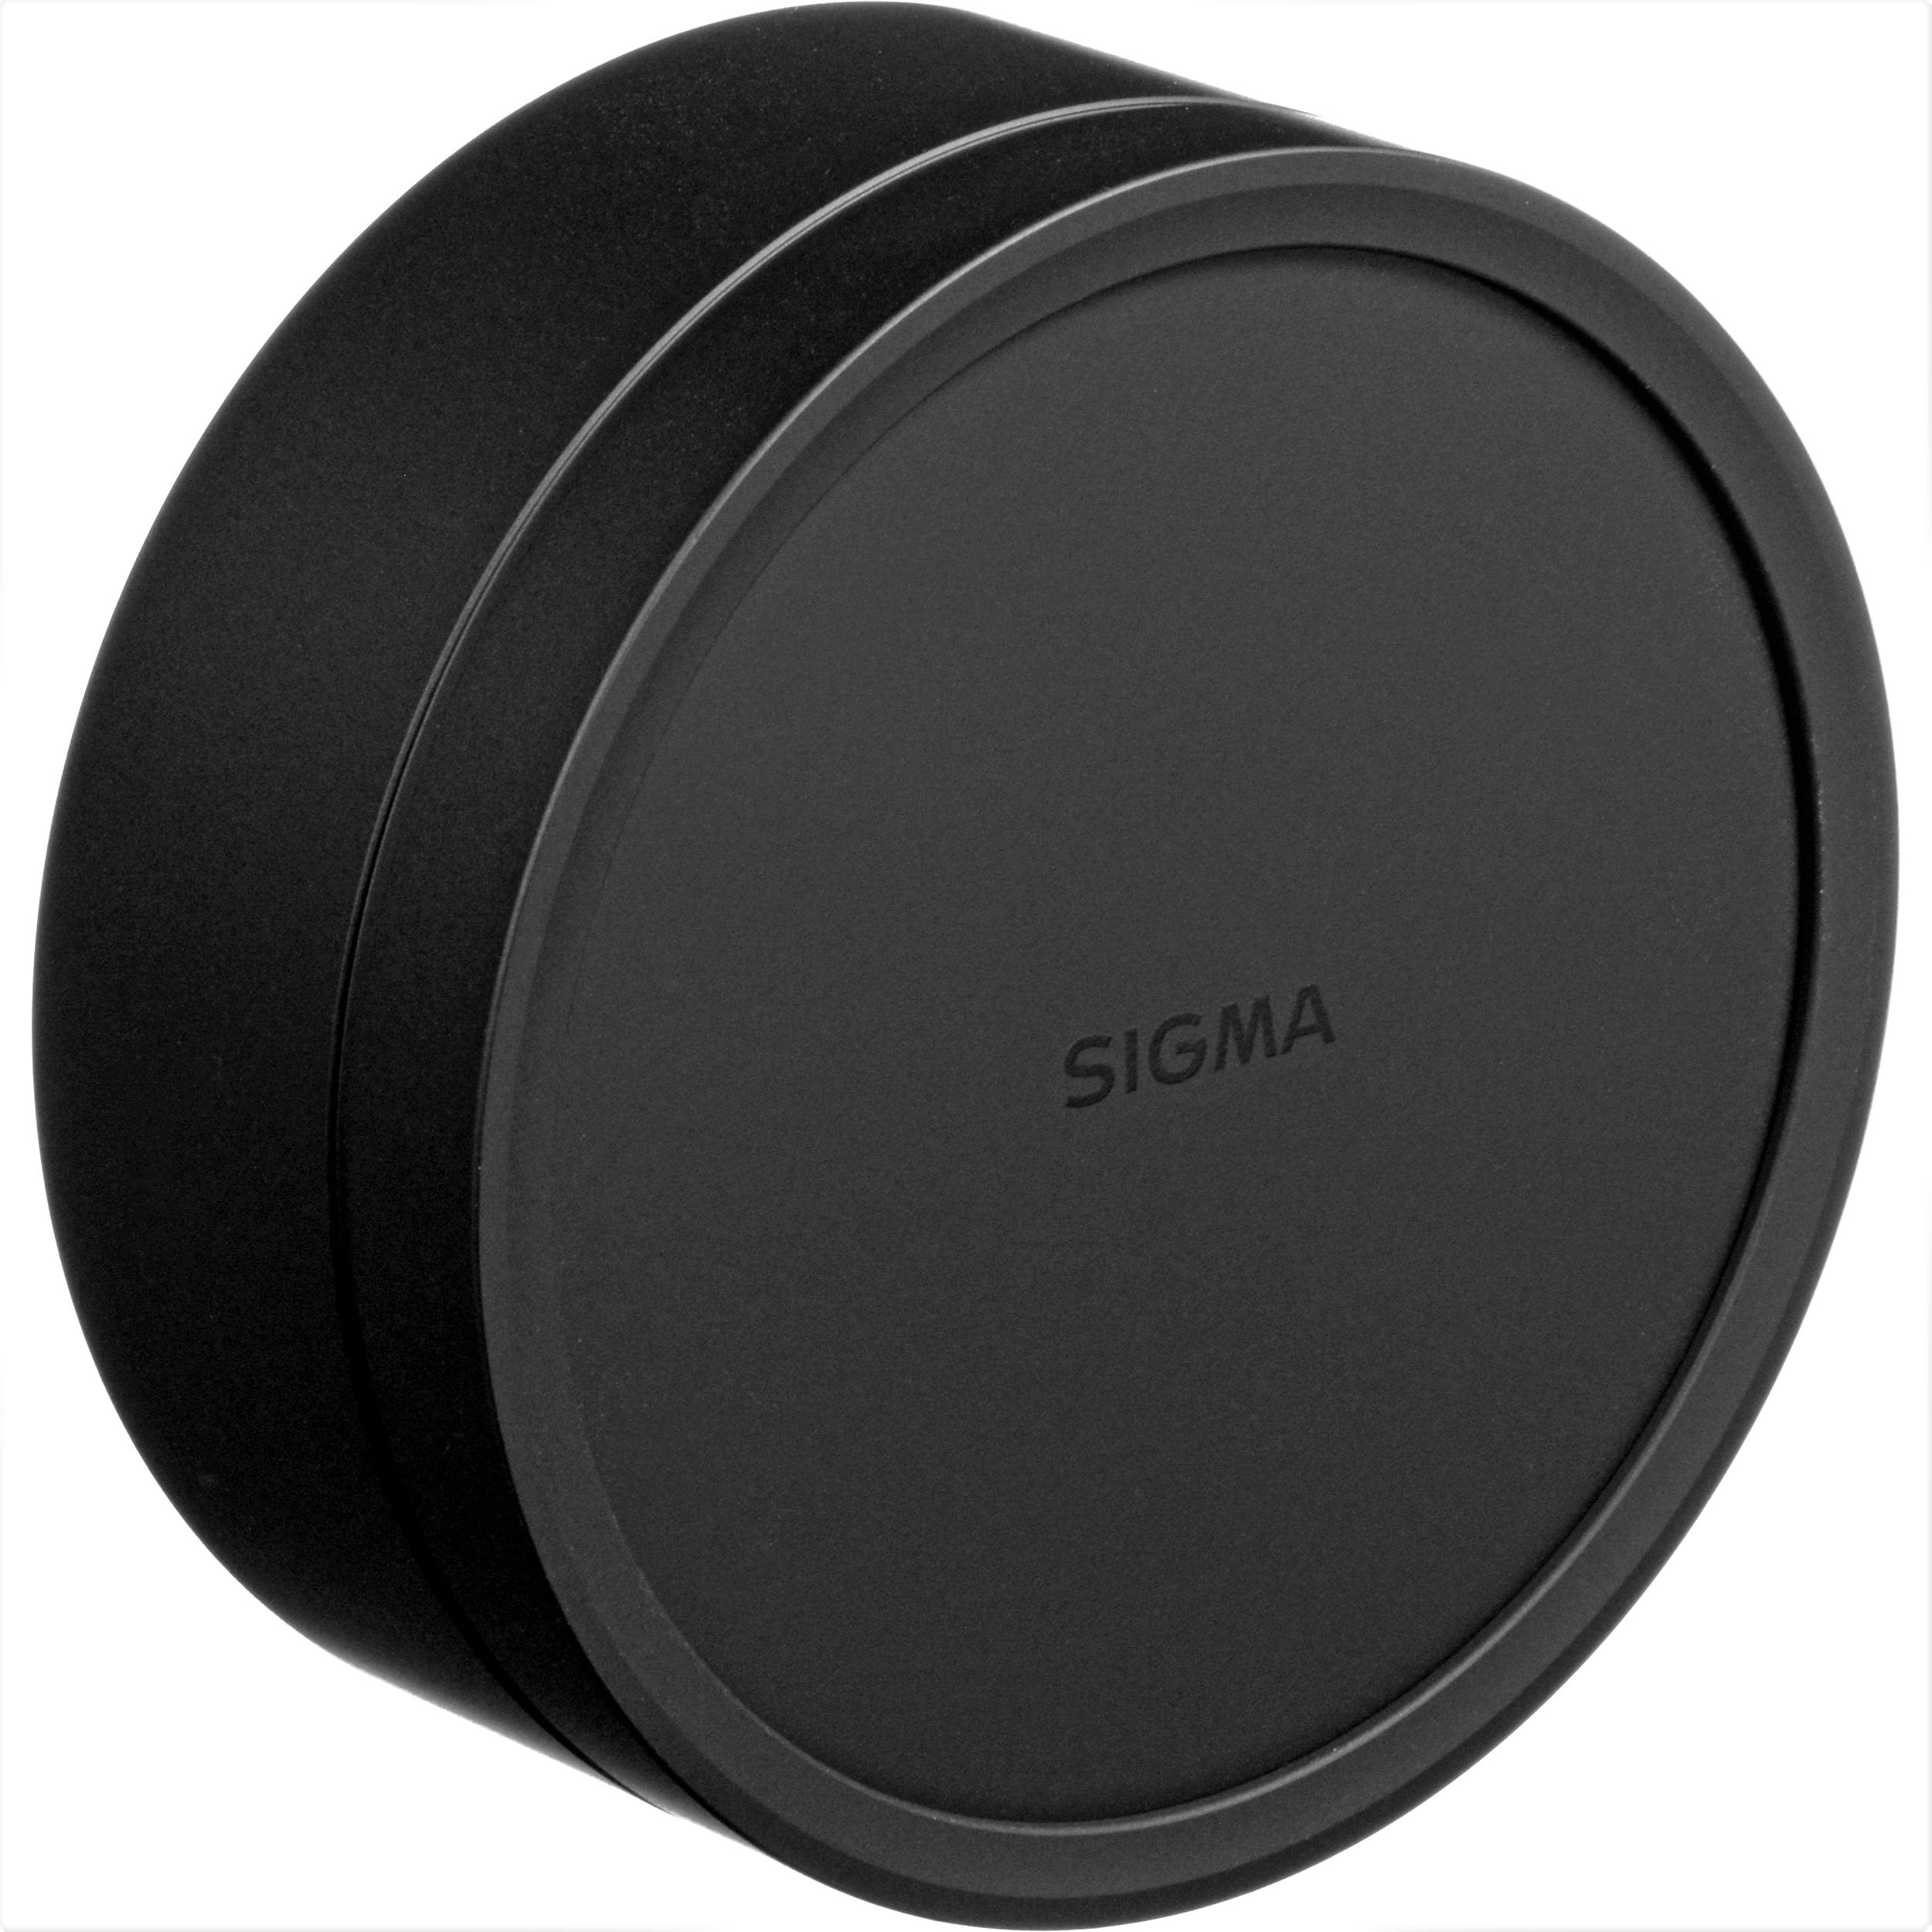 Sigma Cover Lens Cap for 8-16mm F4.5-5.6 DC HSM & 15mm F2.8 EX DG Fisheye